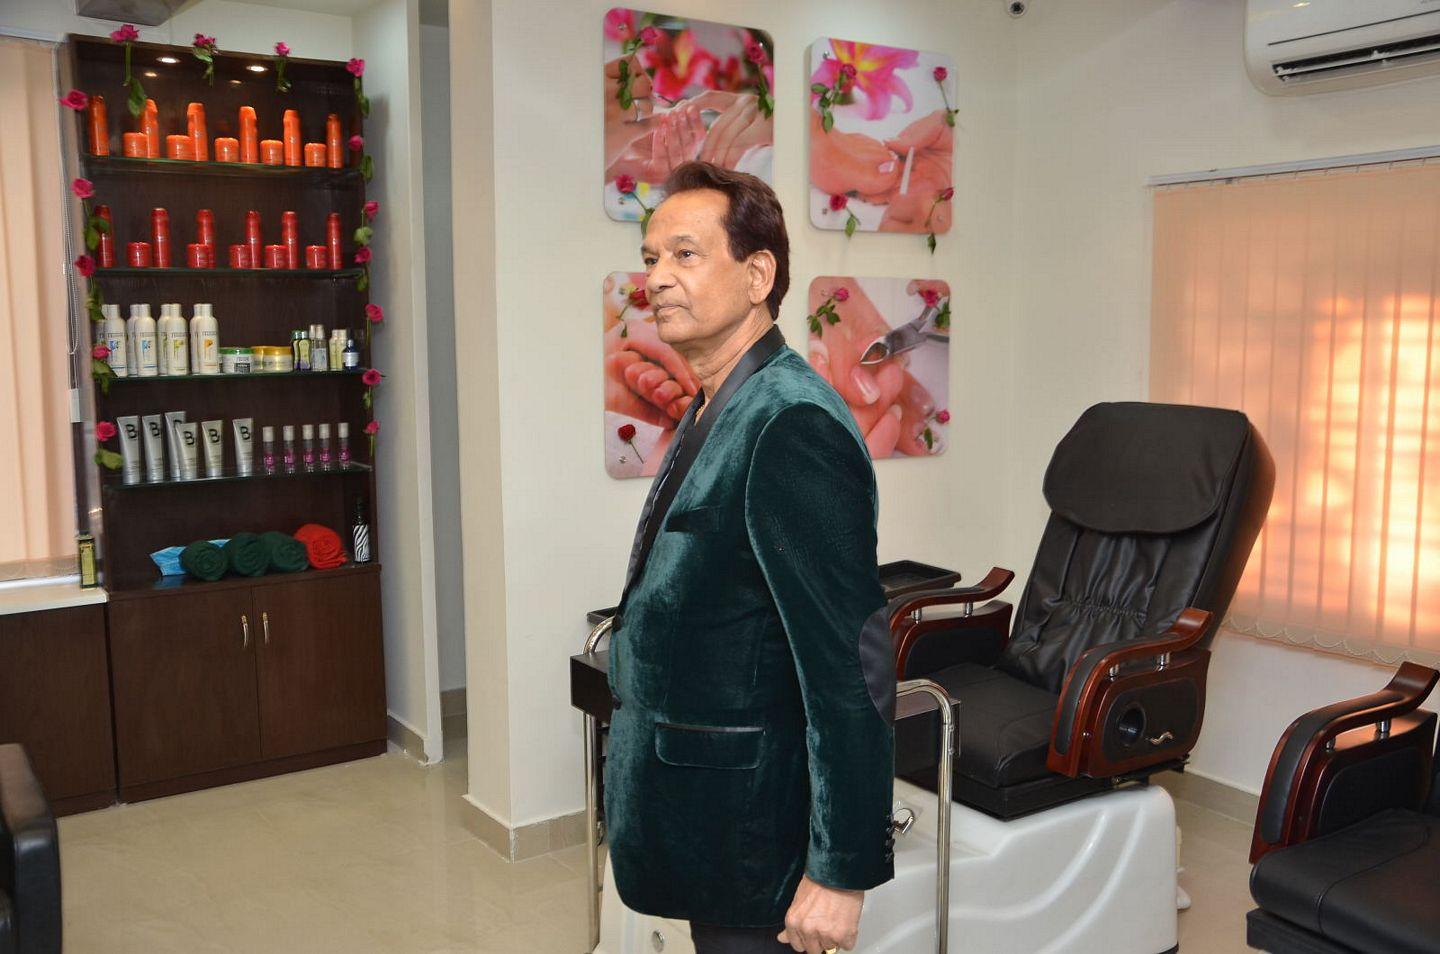 Habibs Hair Beauty Salon Launched Pics